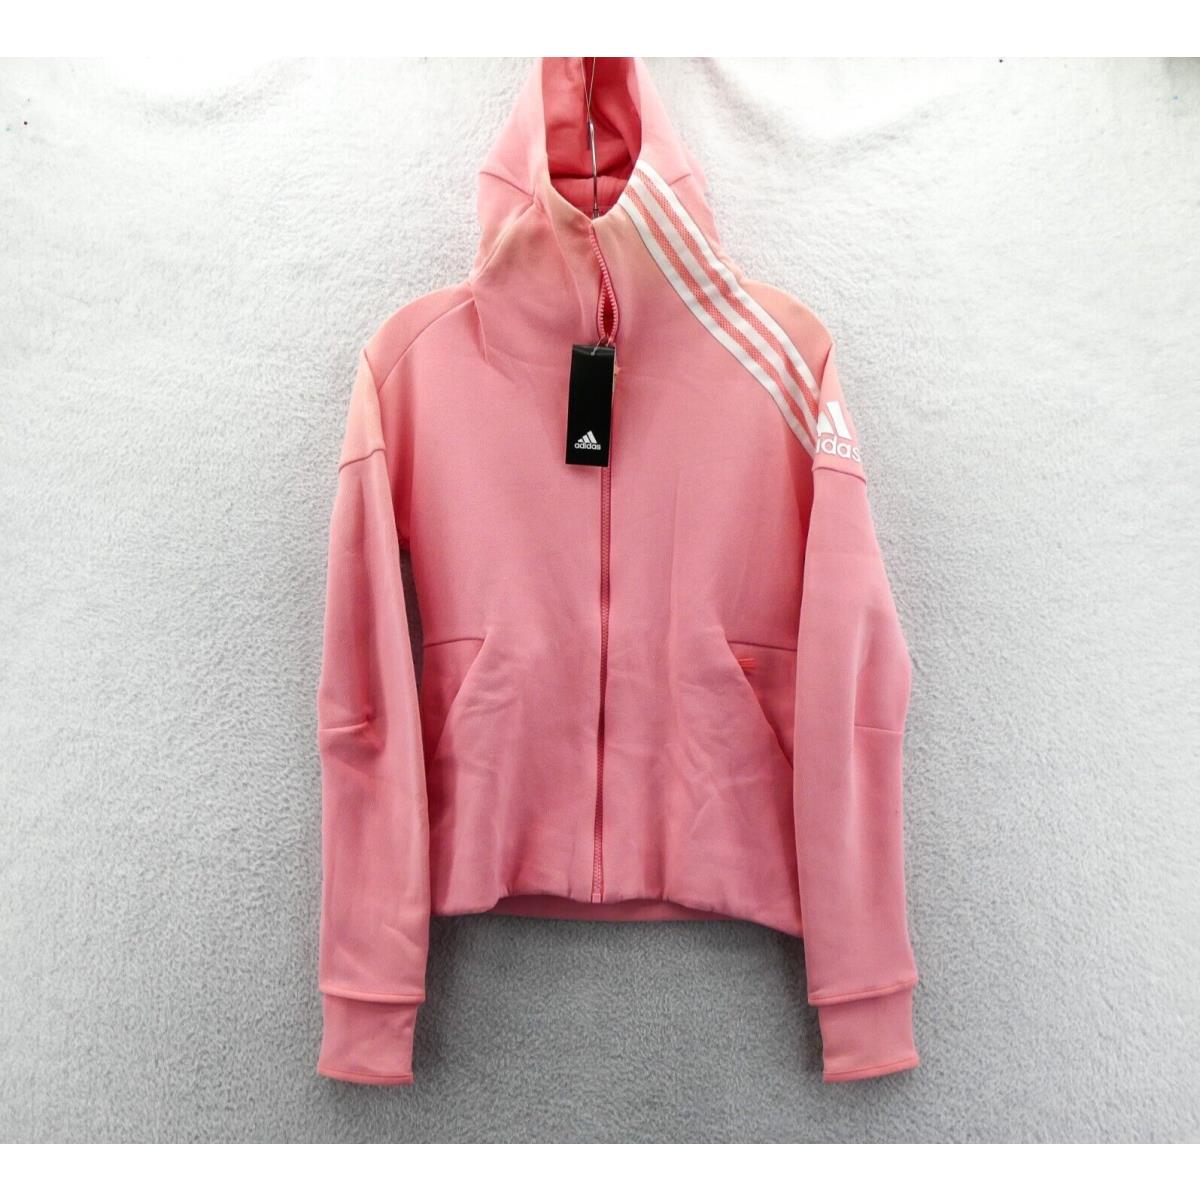 Adidas Zne Hoodie Womens Small 8-10 Pink Sweatshirt Jacket High Neck Rare Z.n.e